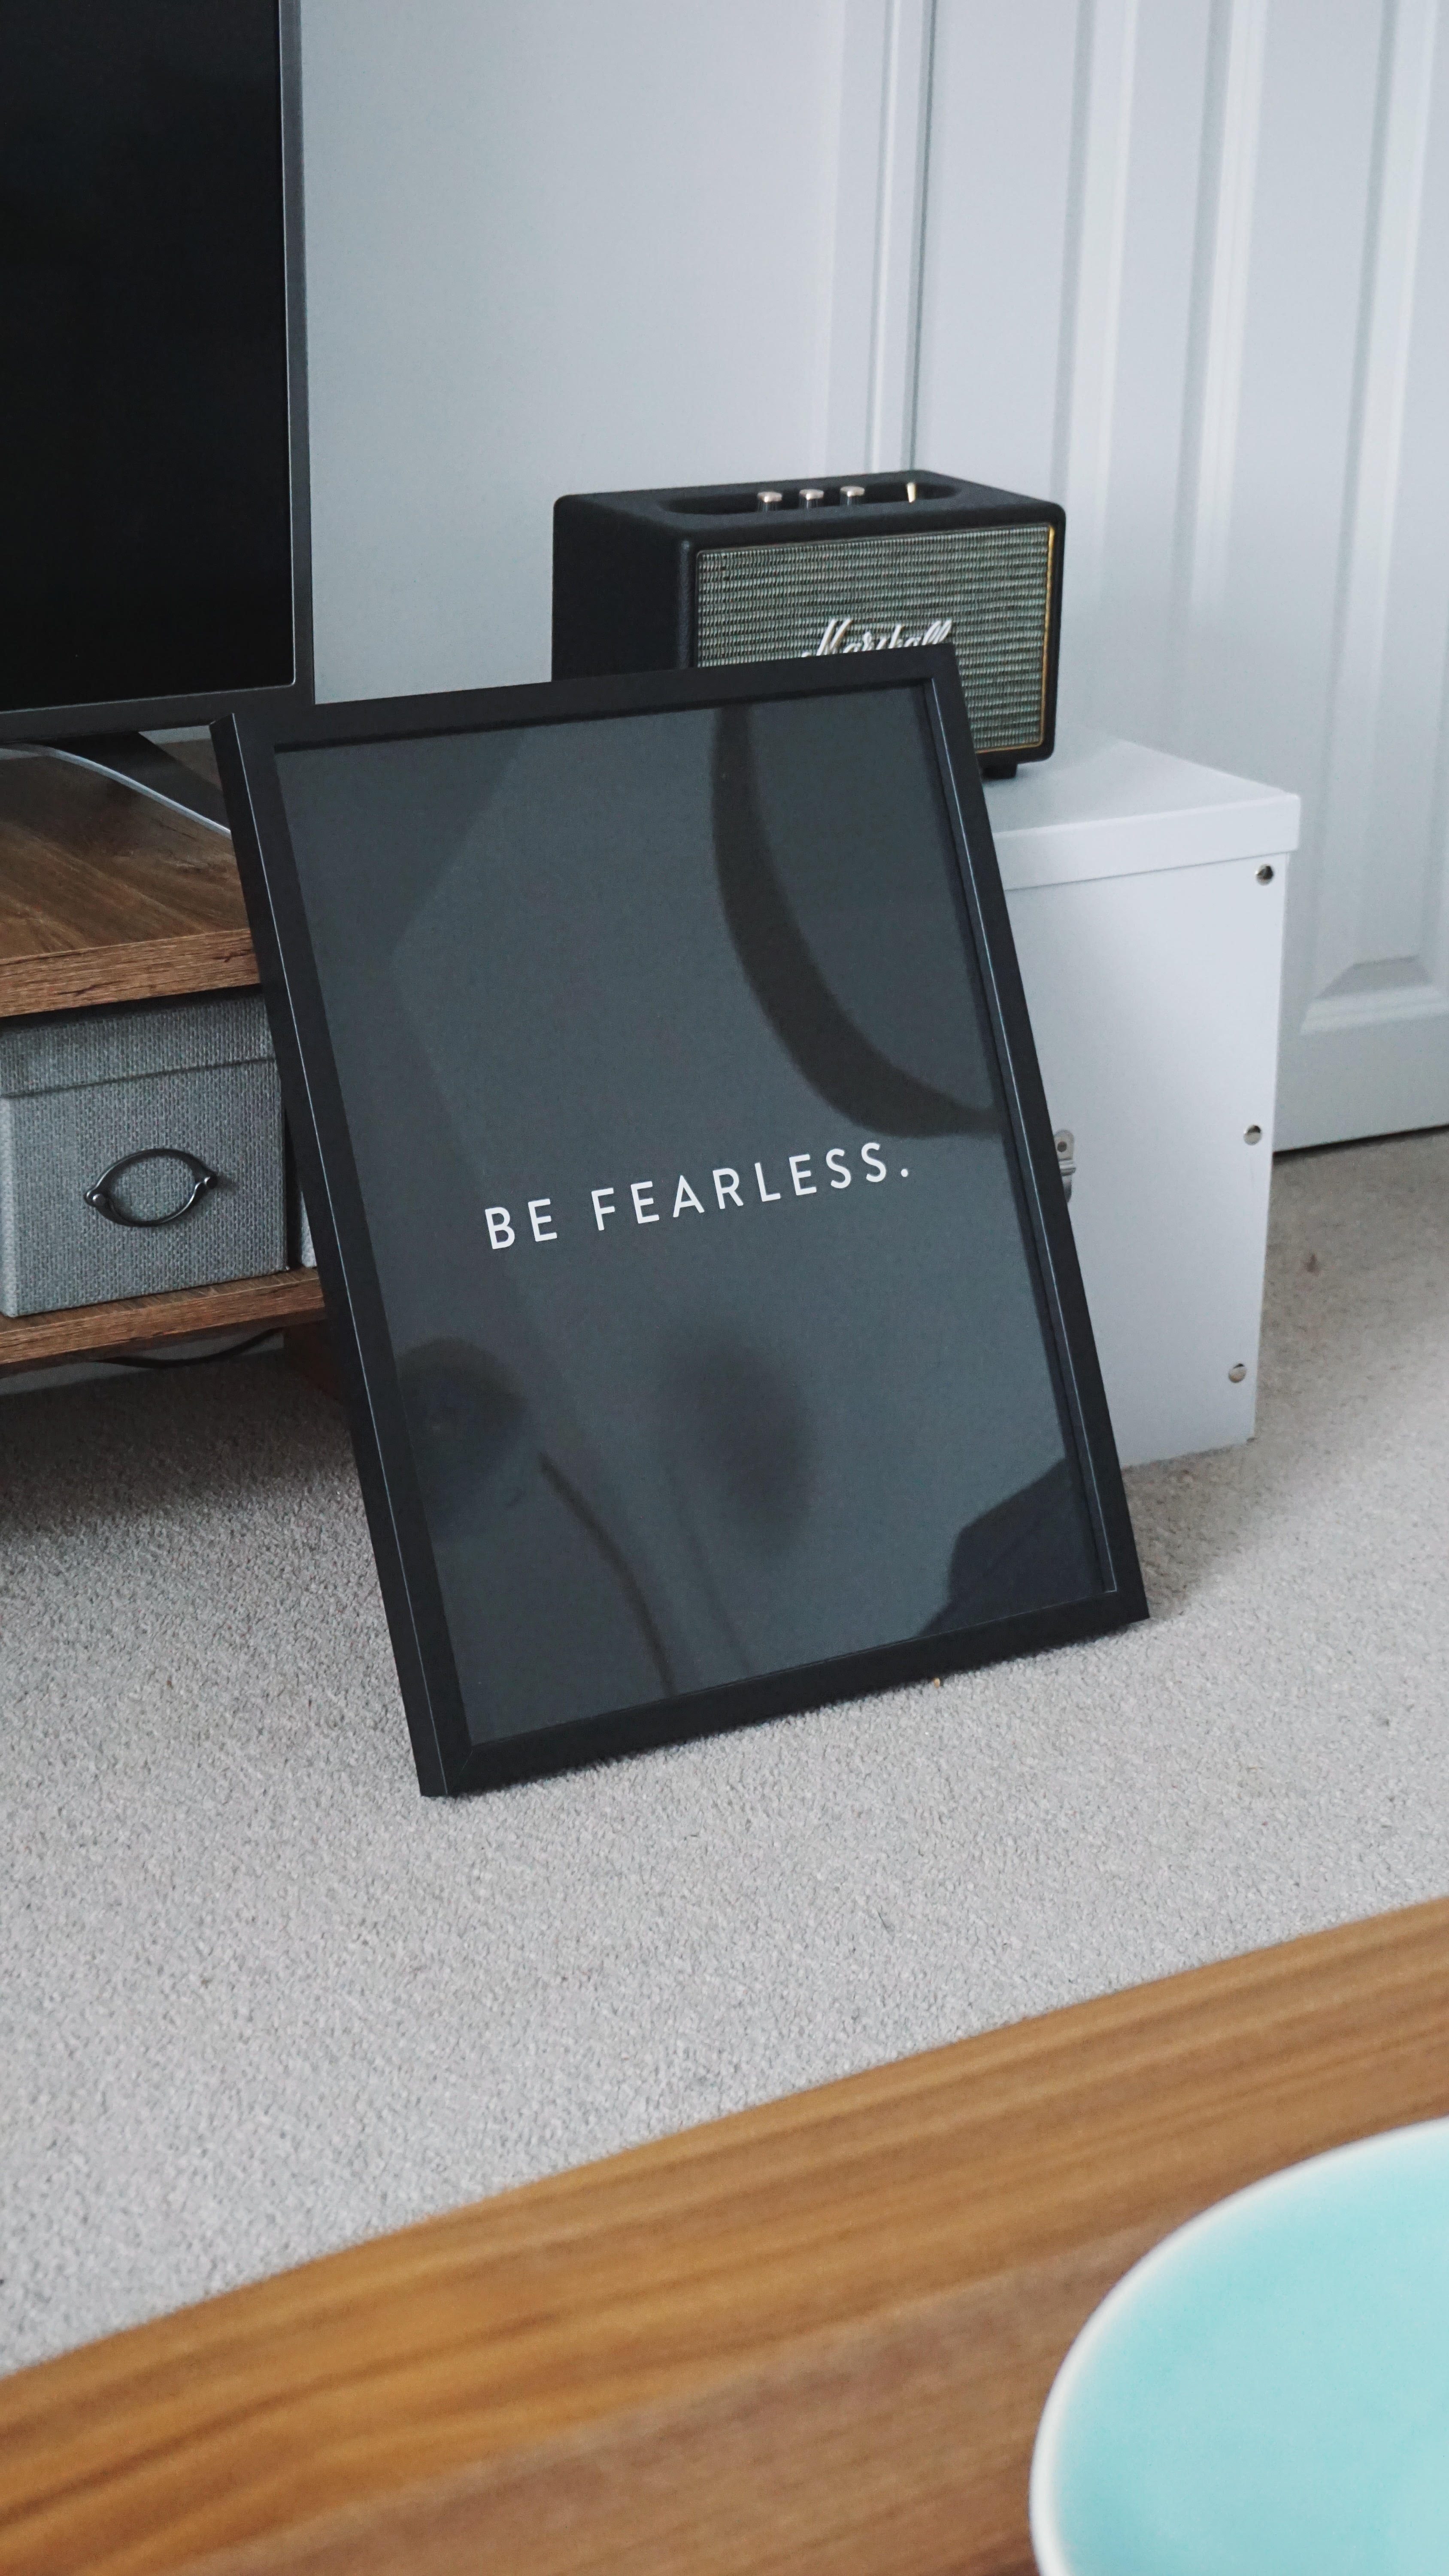 Be fearless.jpg